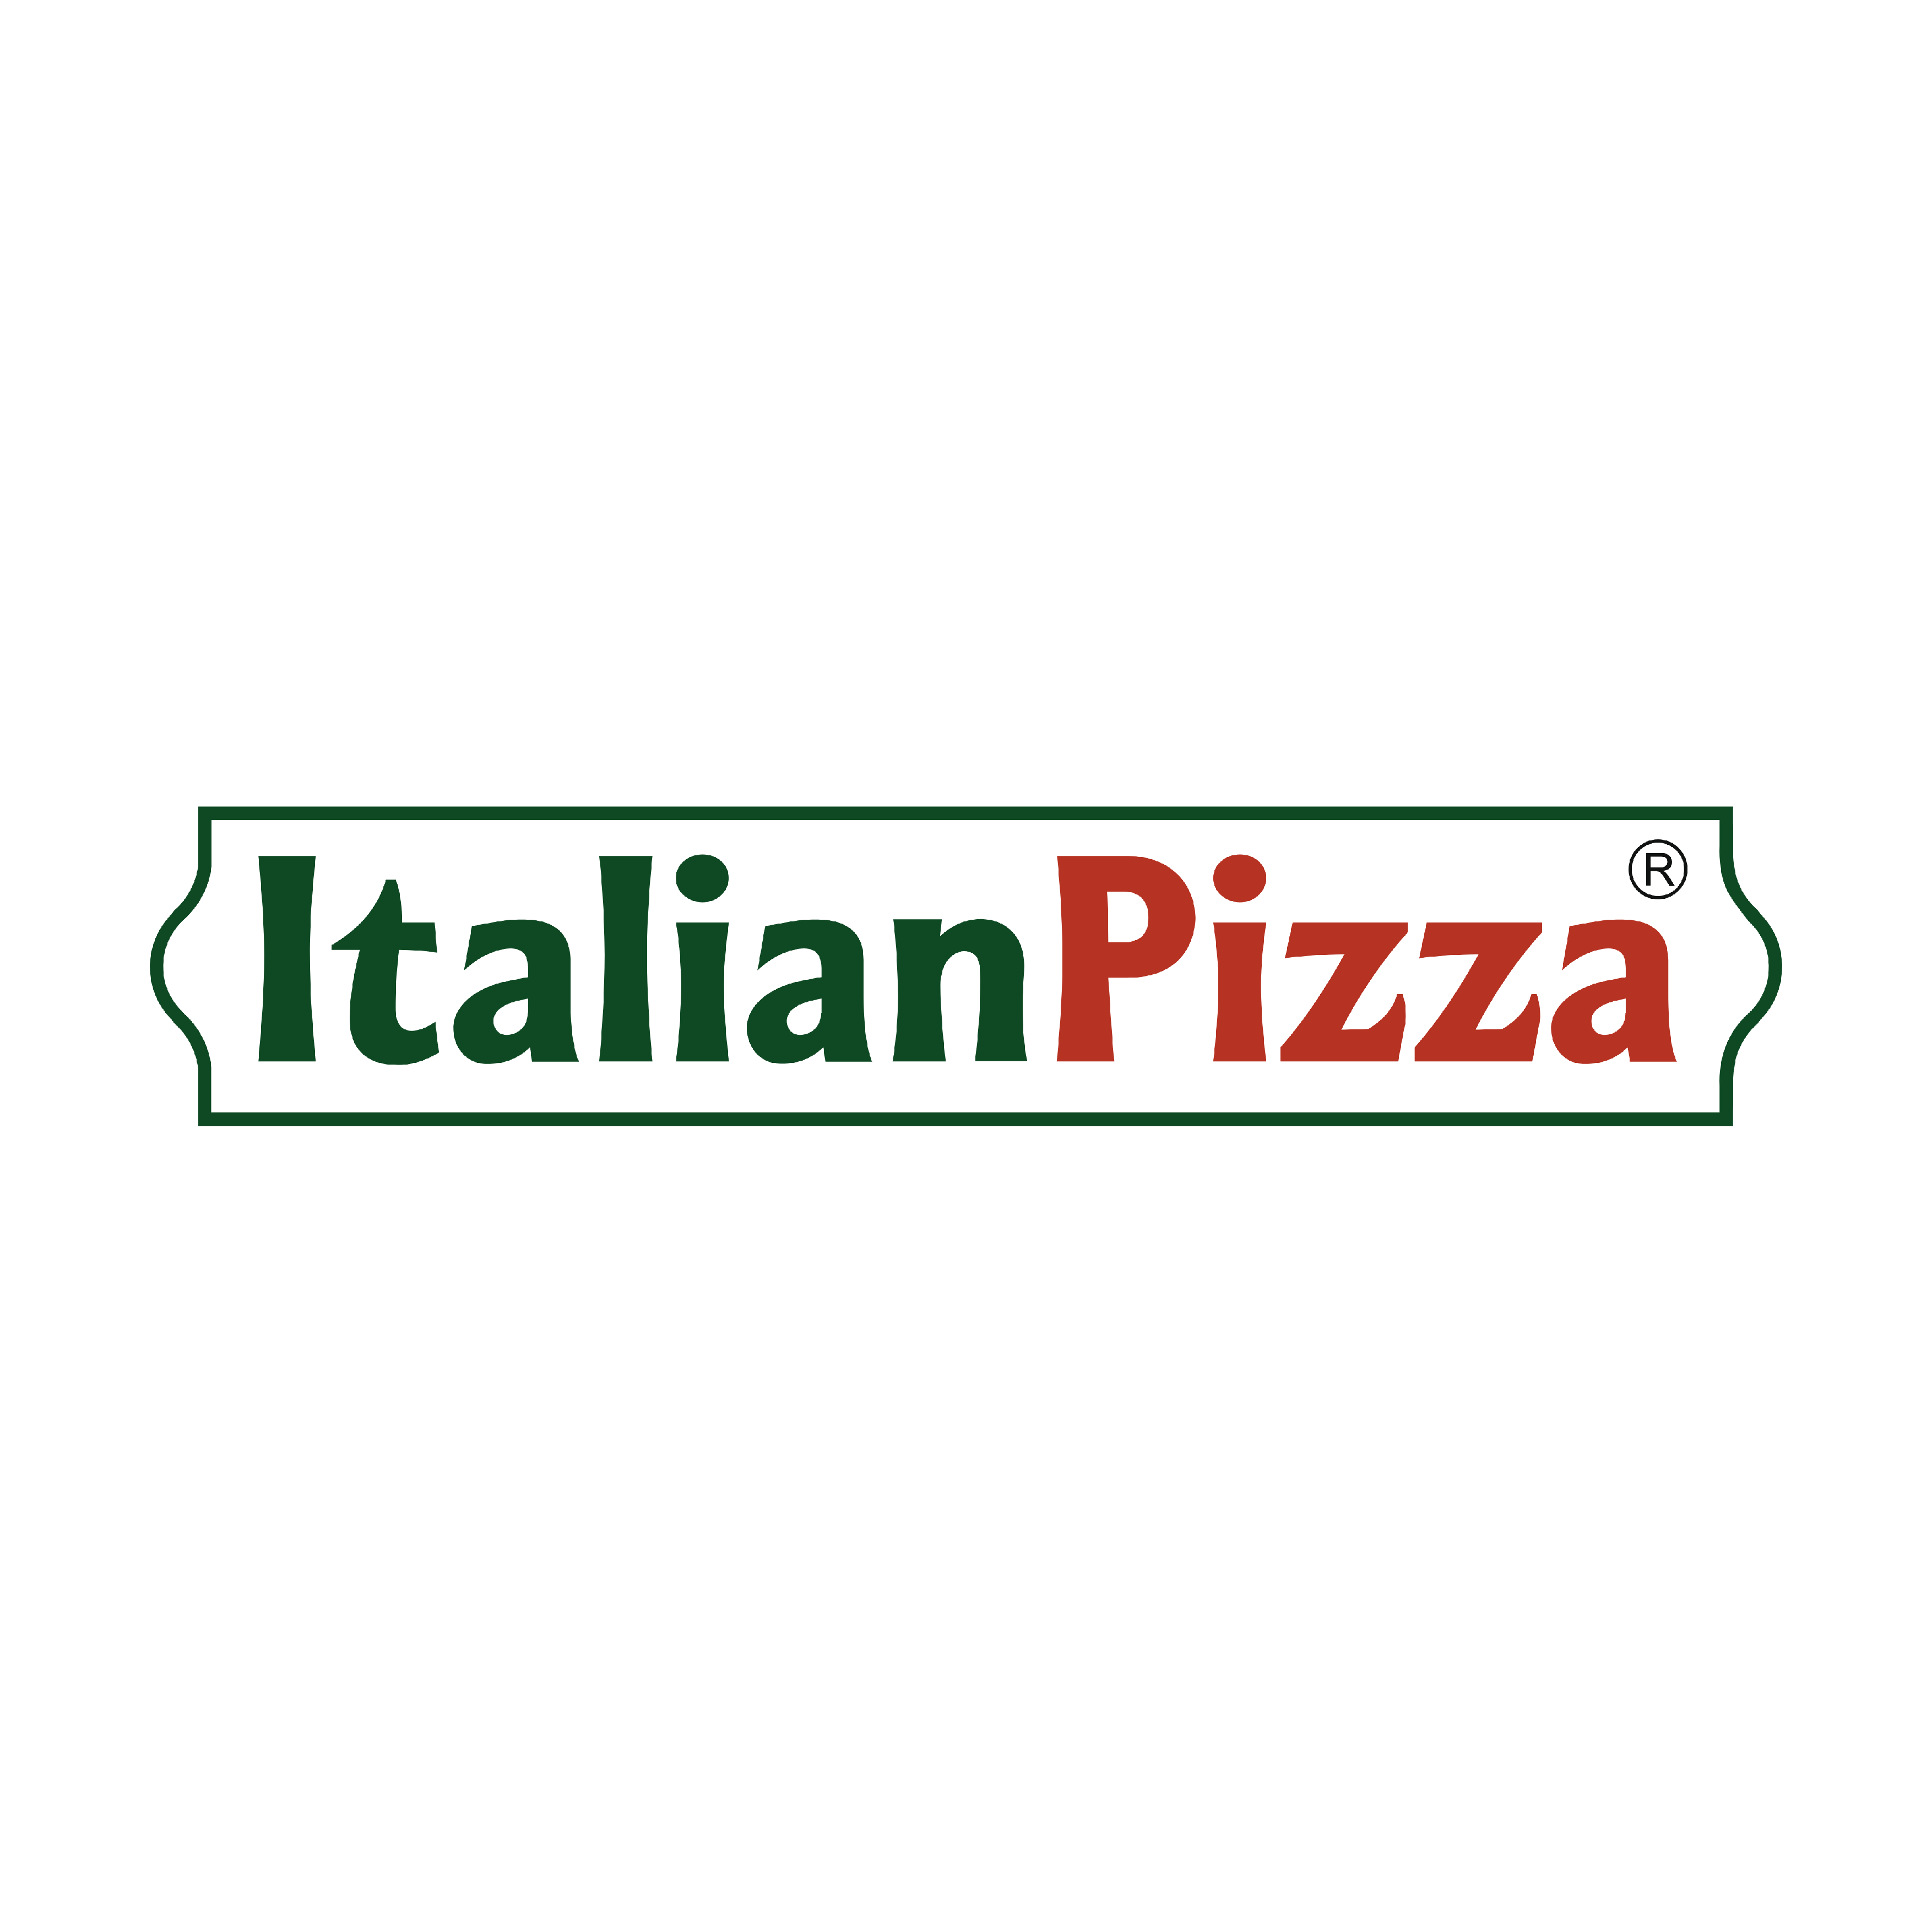 Италиан пицца телефон. Логотип пиццерии. Италиан пицца. Pizza логотип. Italian pizza лого.